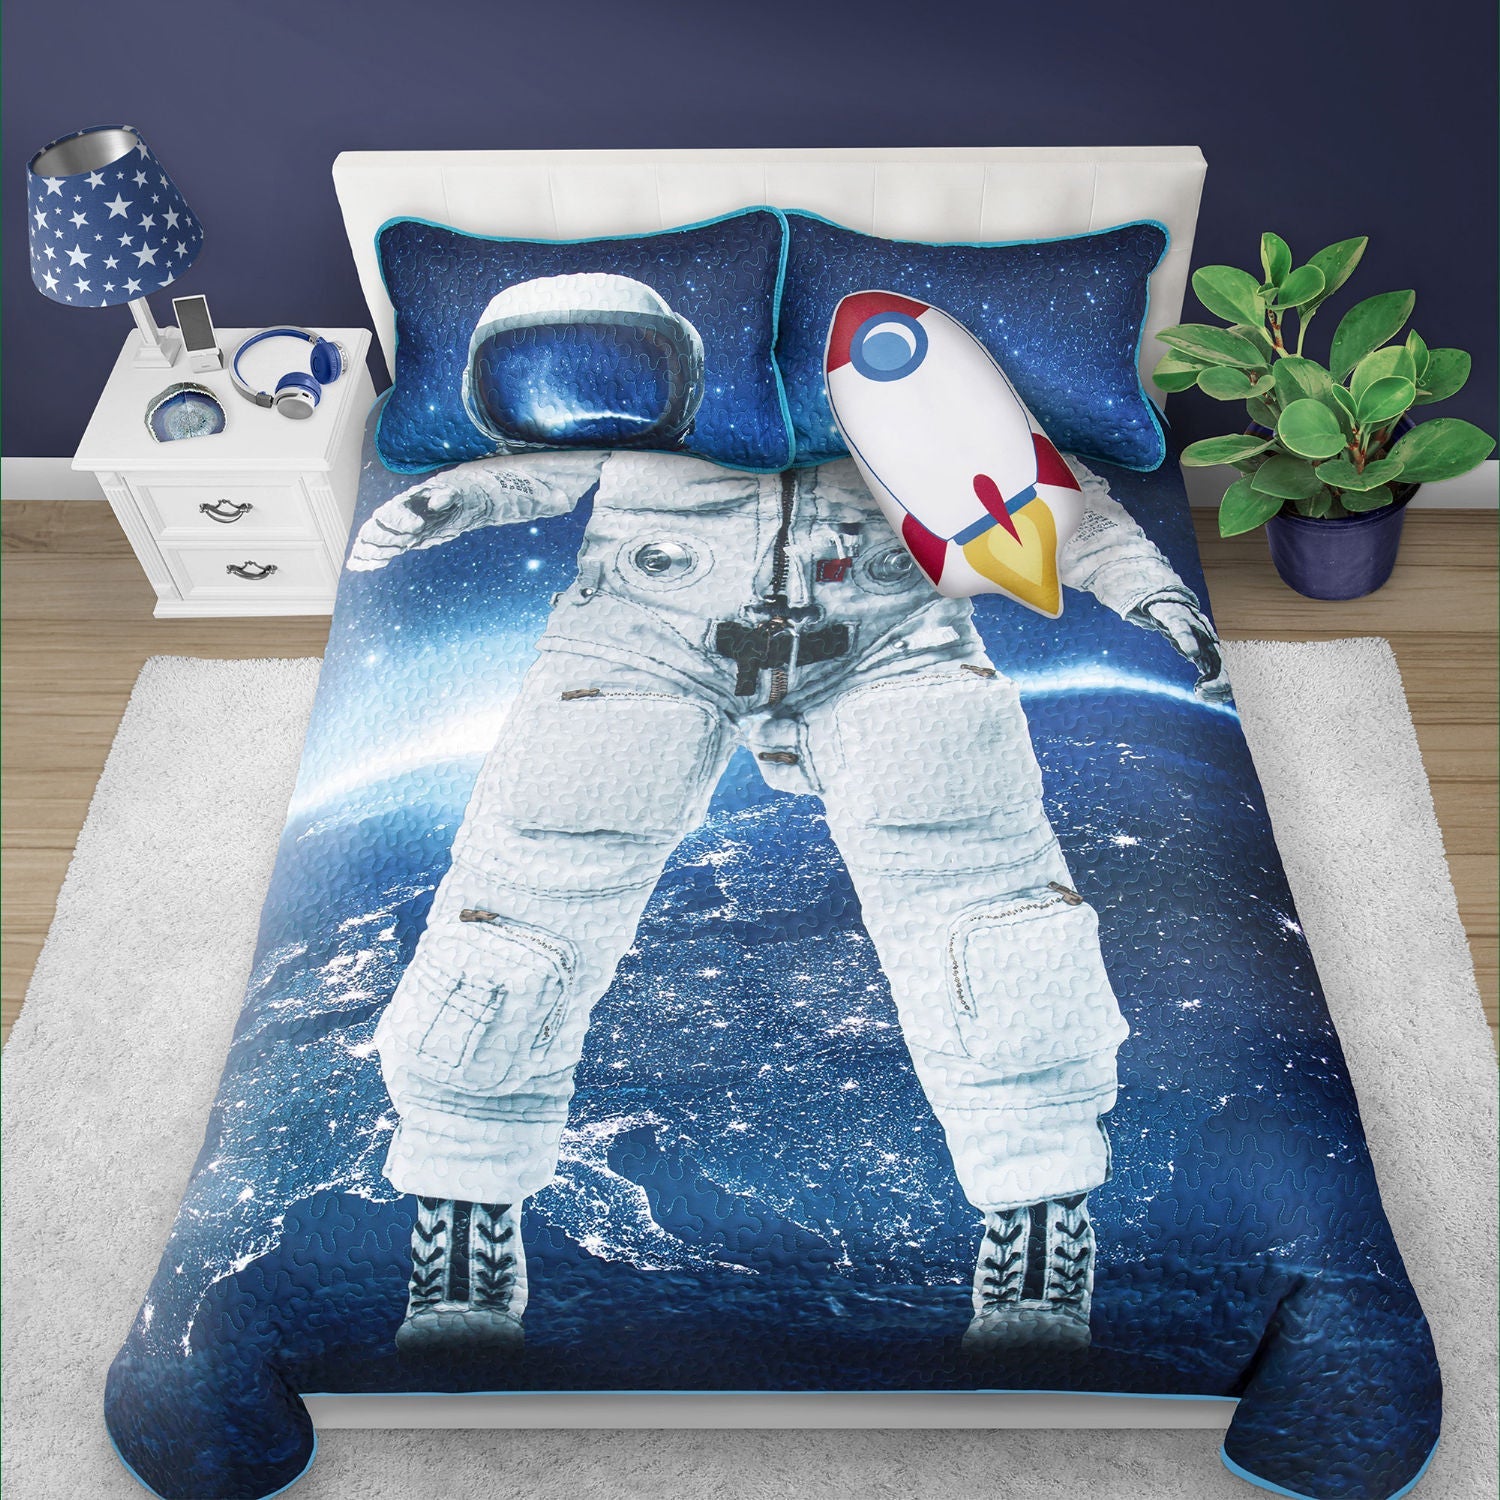 Wov Printed Quilt Bedding Set 3 Piece Double/Queen Astronaut